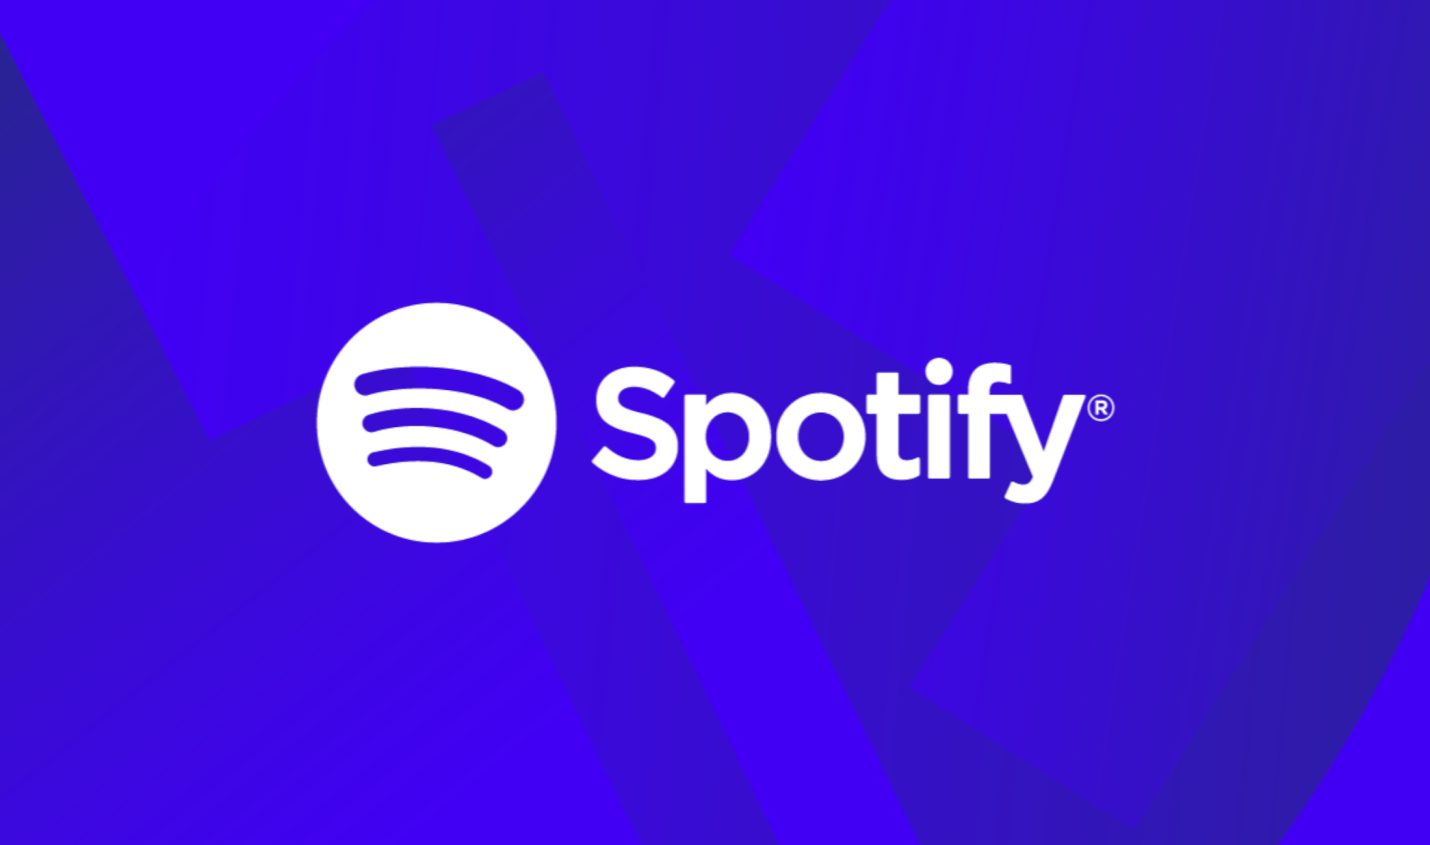 Spotify: Sofortige Preiserhöhung in 53 Ländern